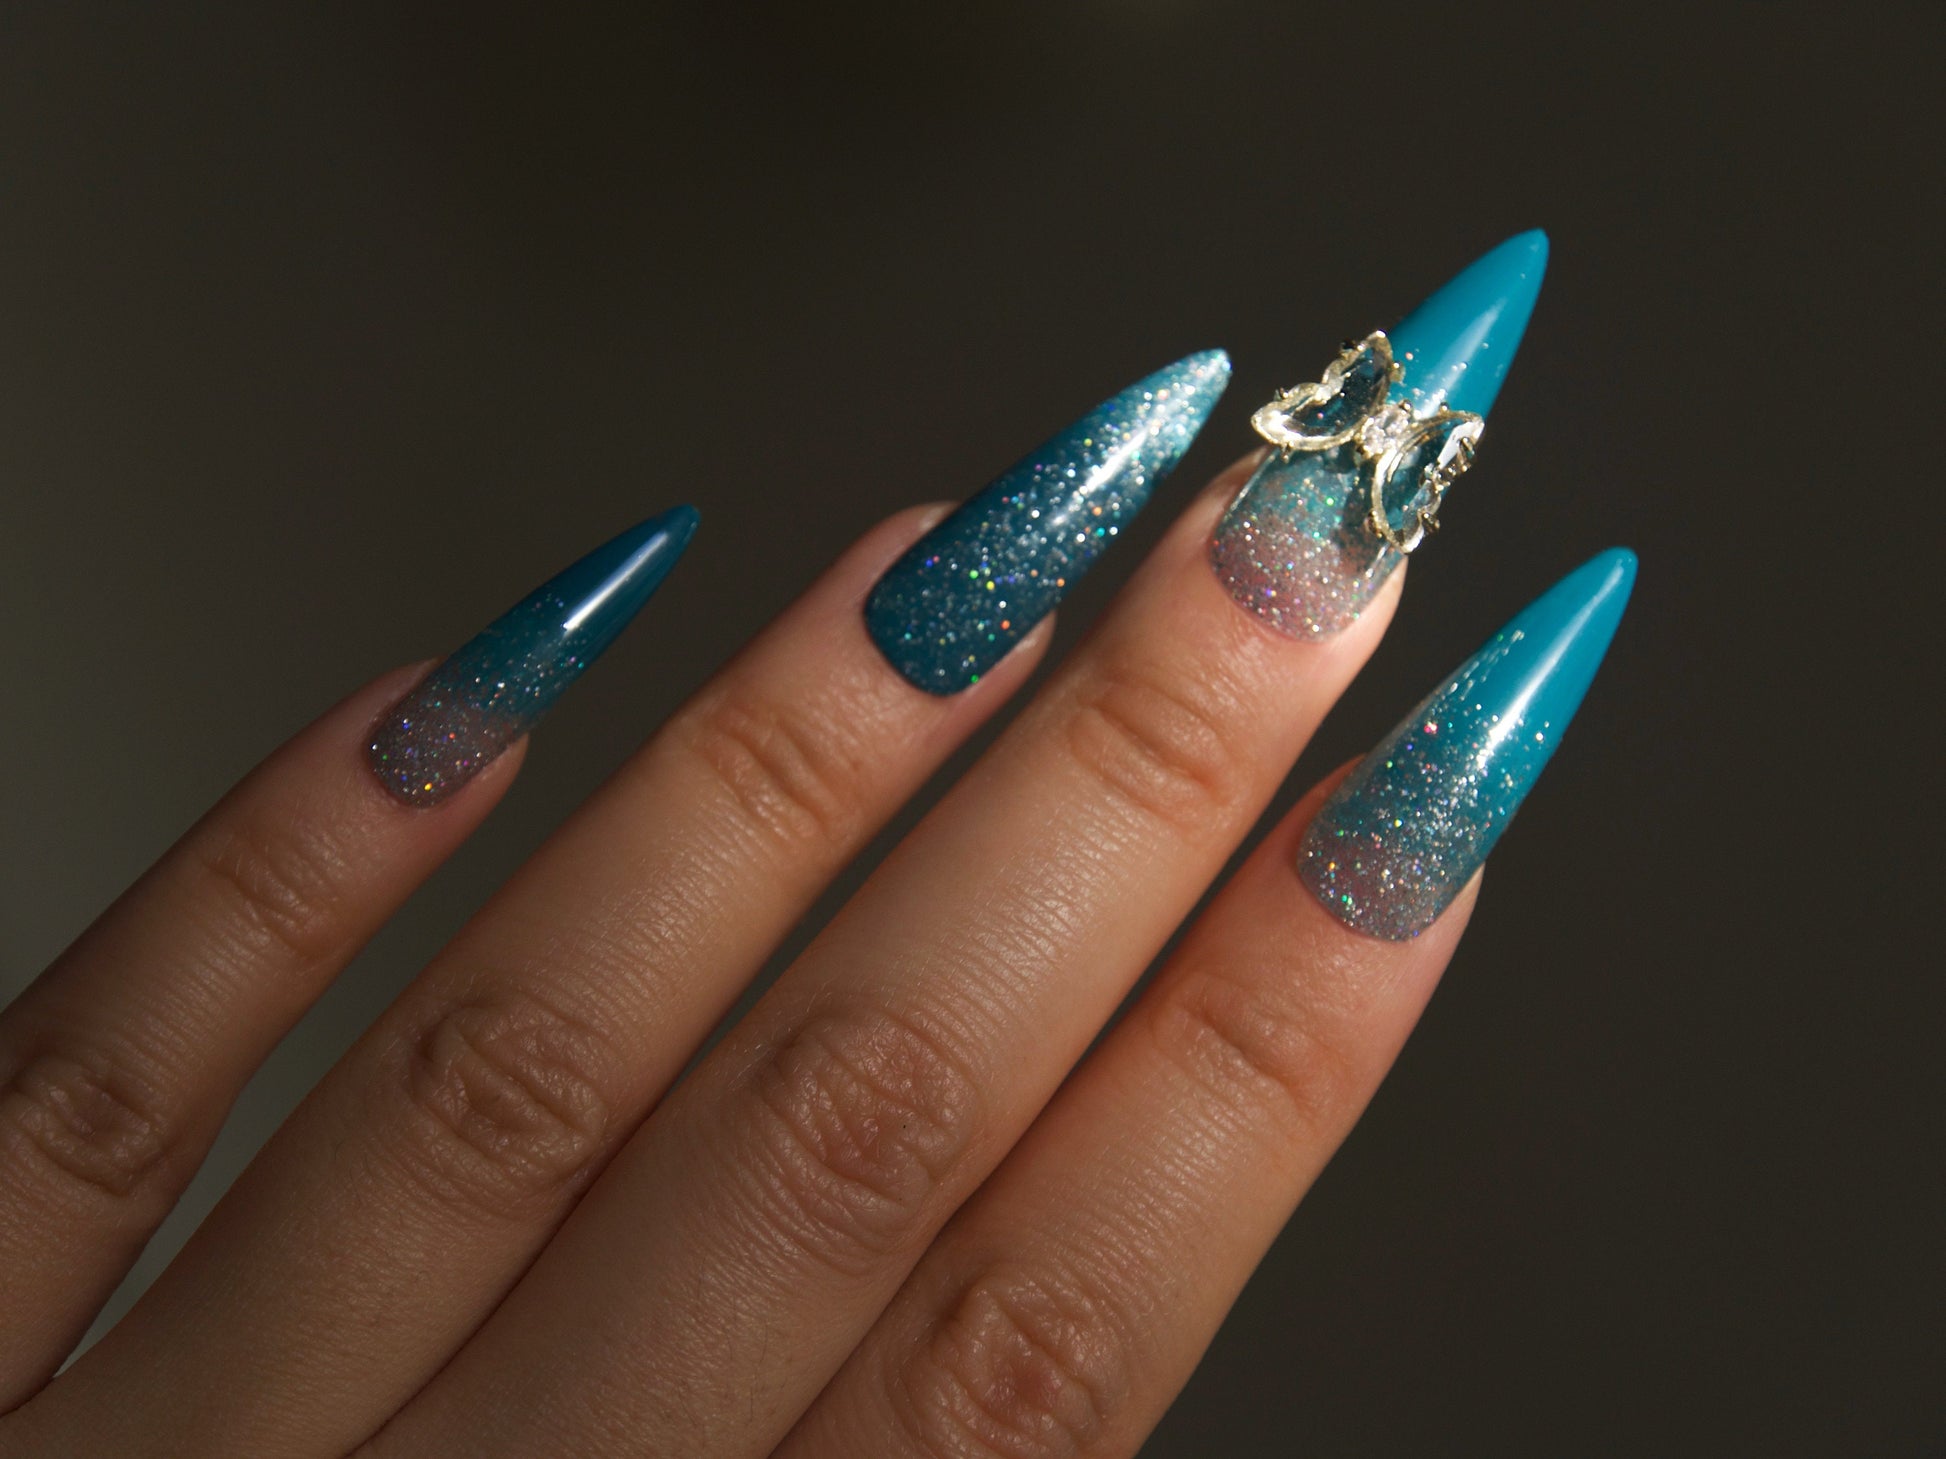 Zircon Butterfly Nail Jewelry Nail Diamond Manicure 3D Gem Nail Art Beauty  Cute